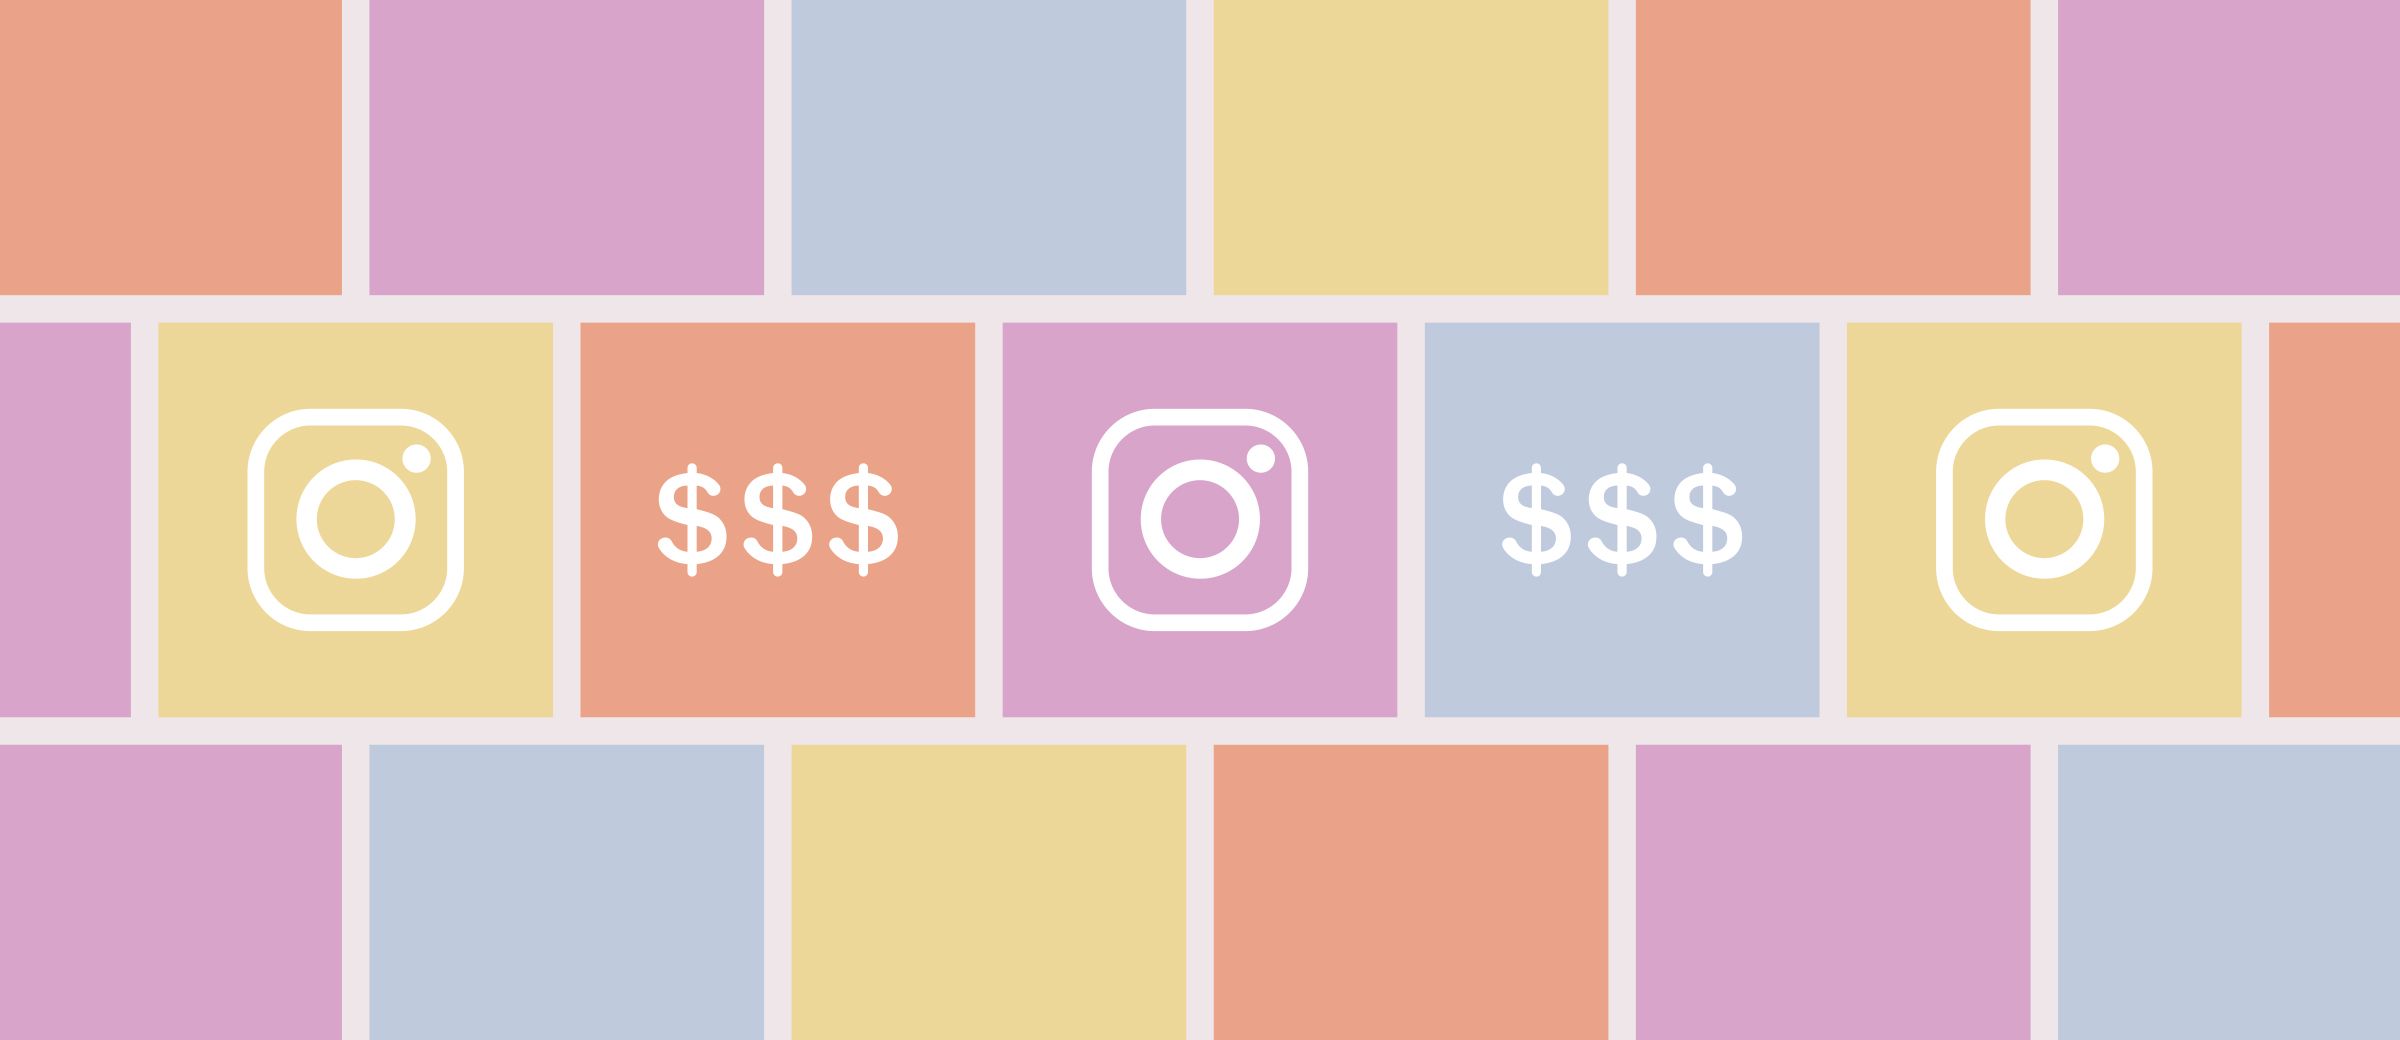 How to Monetize Instagram: 3 Tips for Beginners